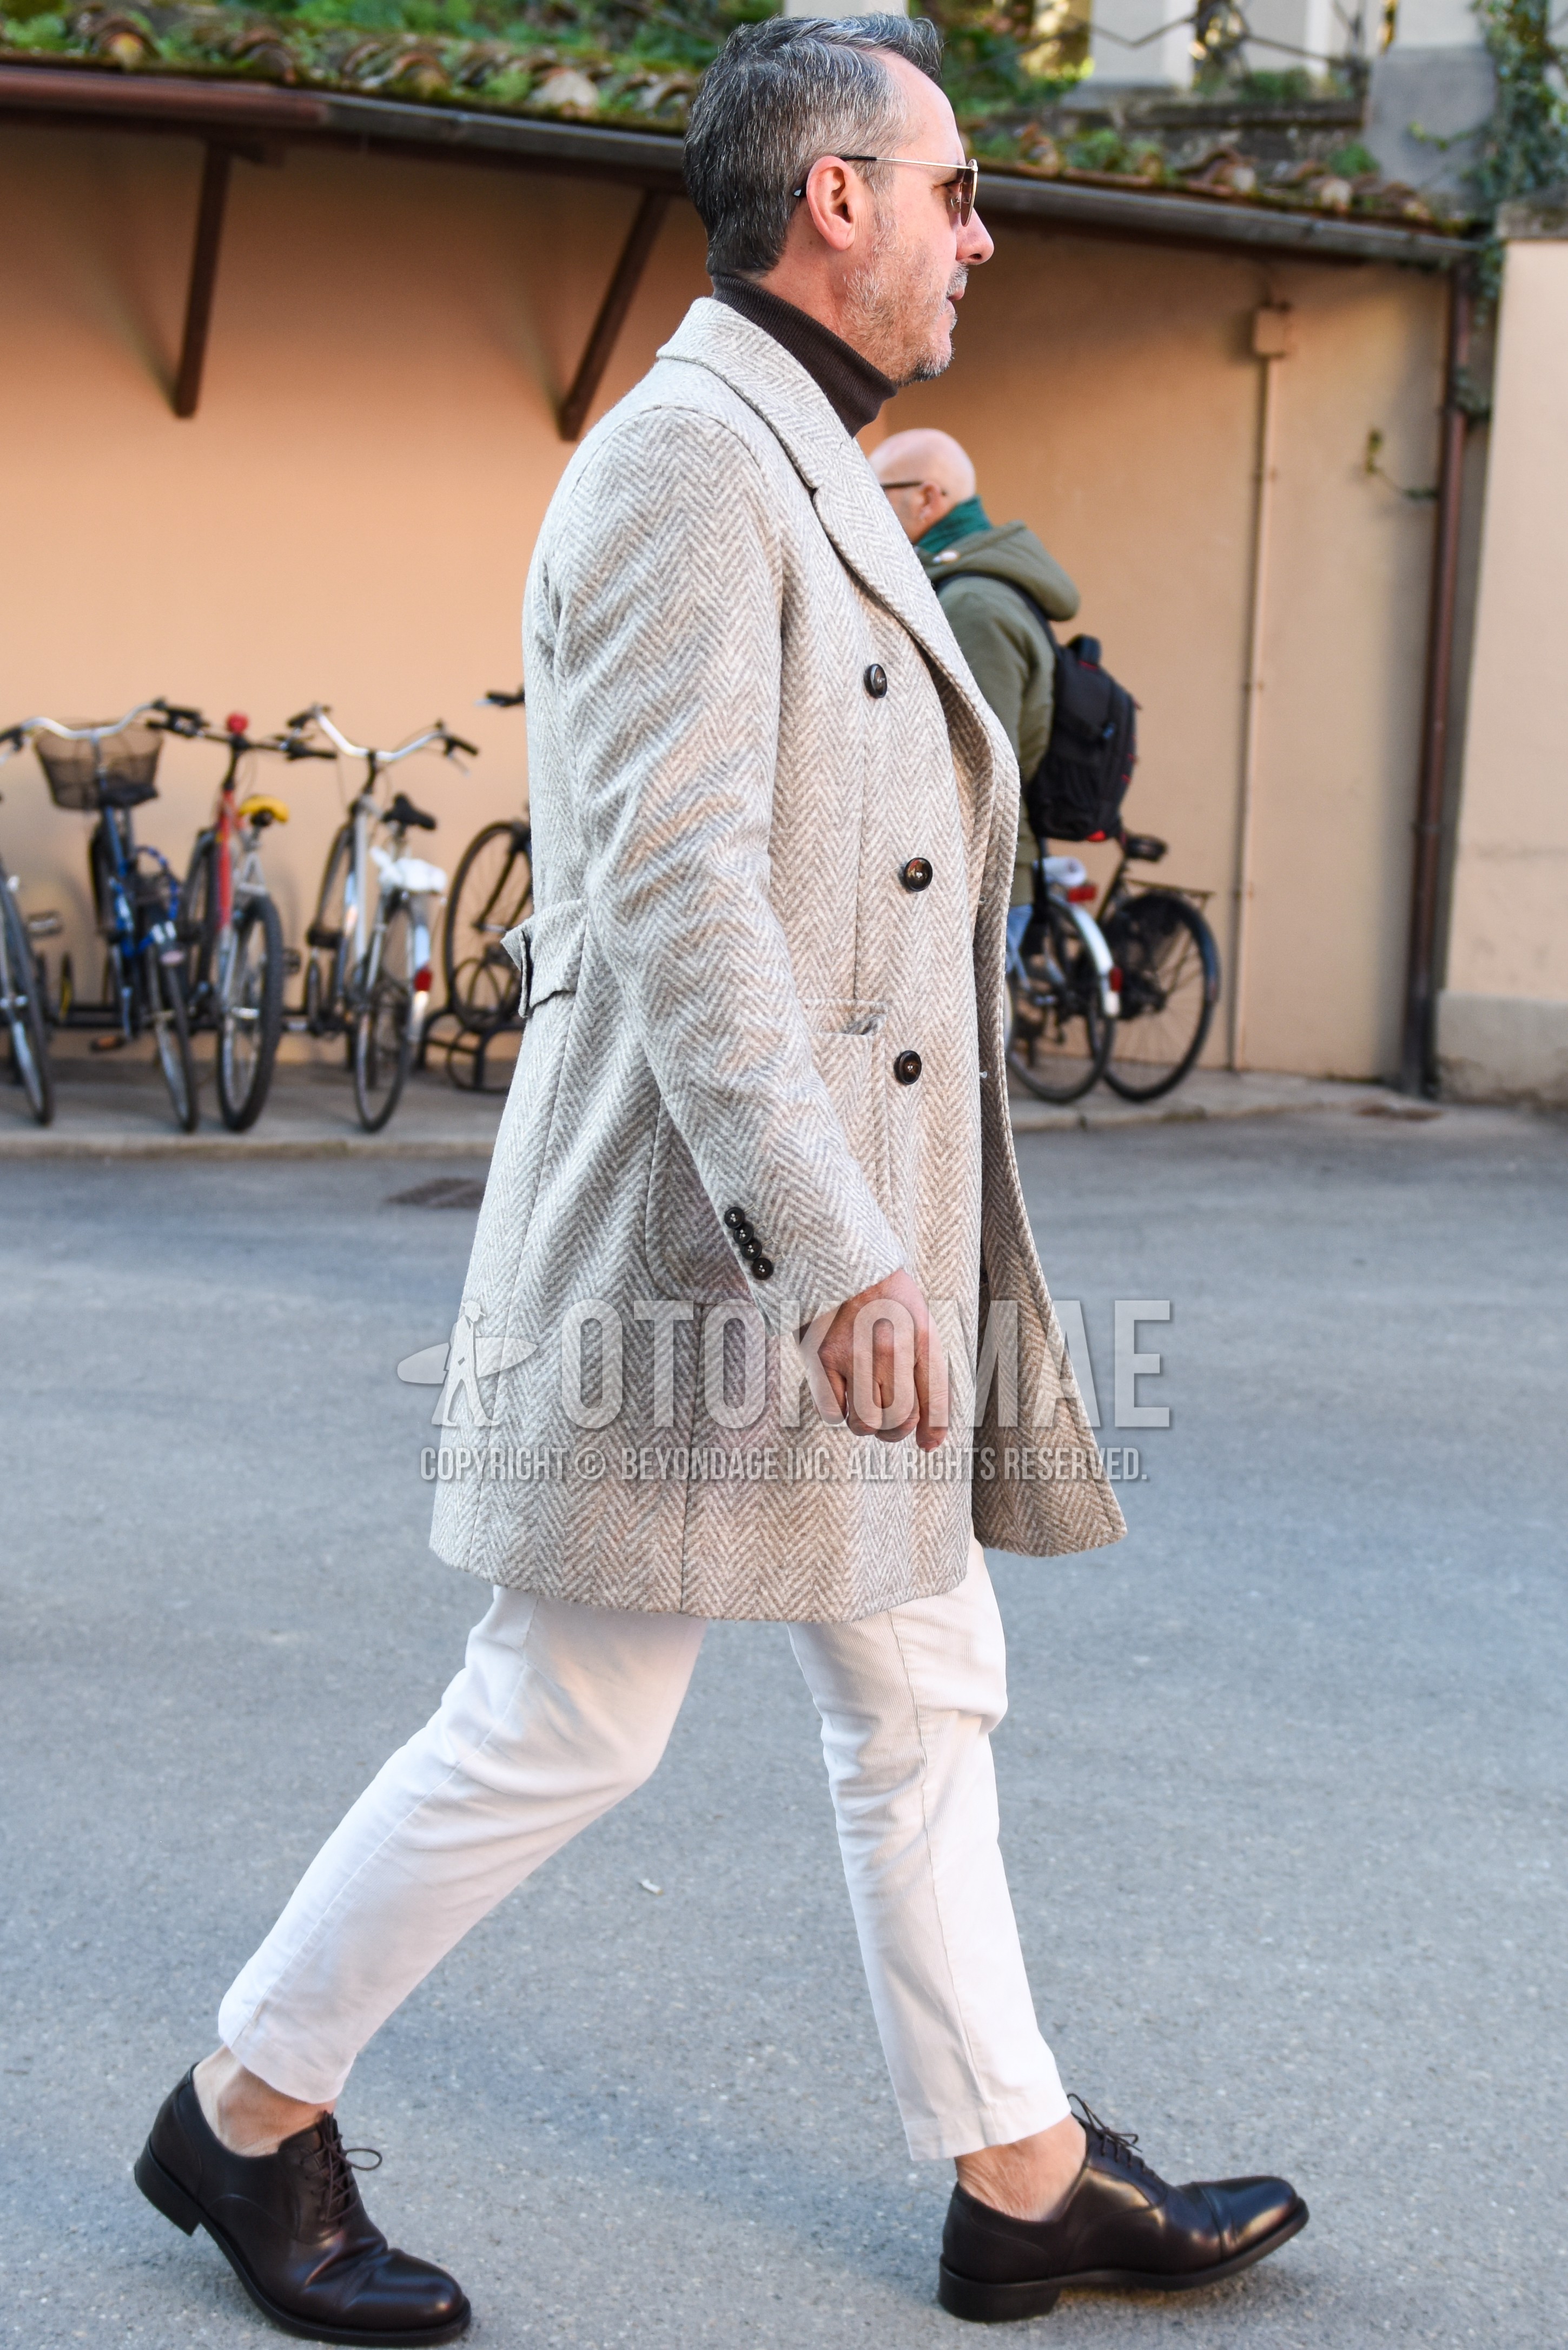 Men's autumn winter outfit with gray herringbone chester coat, black plain turtleneck knit, white plain slacks, white plain ankle pants, black straight-tip shoes leather shoes.